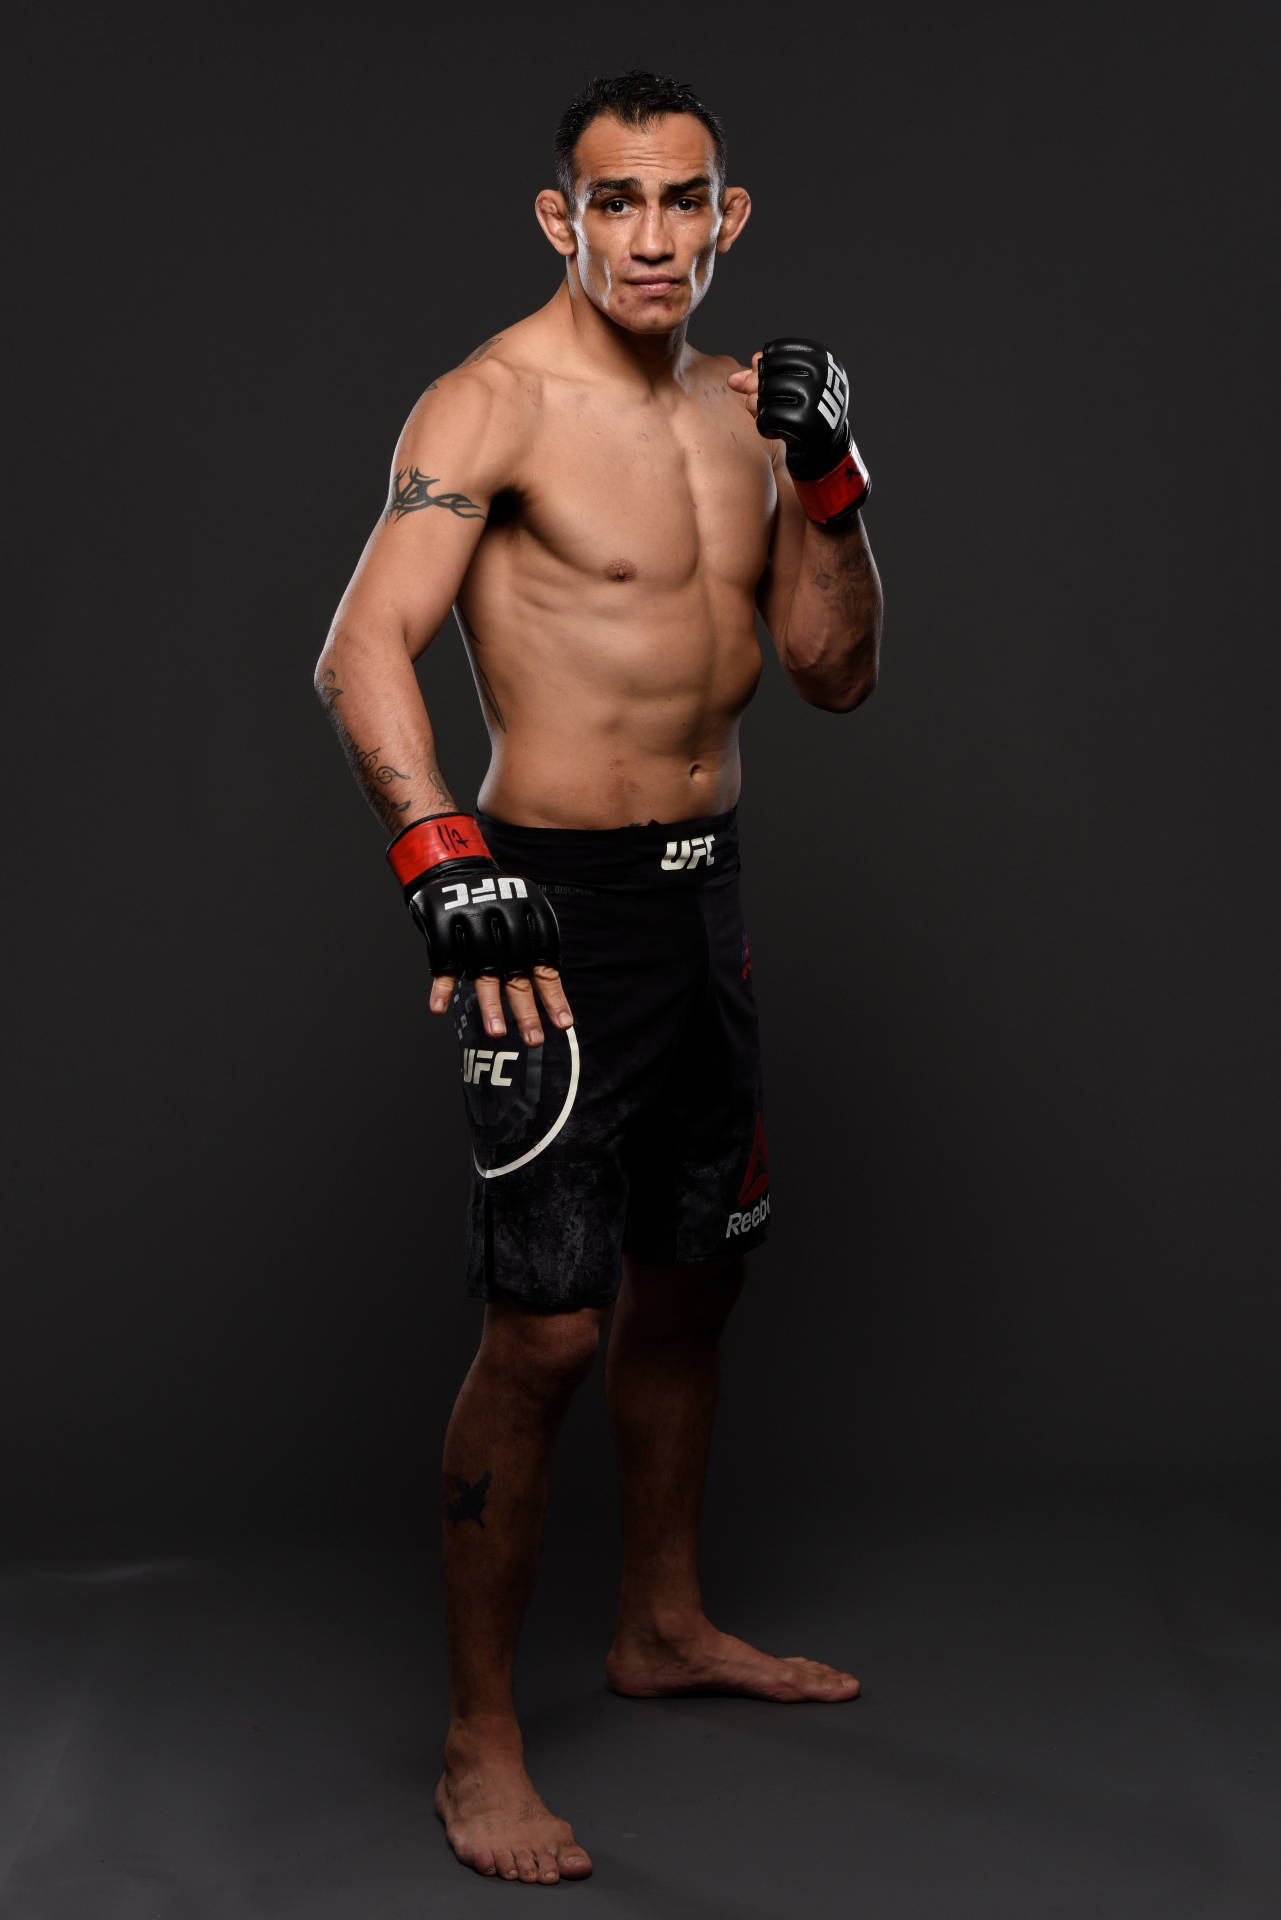 Wallpaper Fighter UFC Tony Ferguson El Cucuy images for desktop section  спорт  download